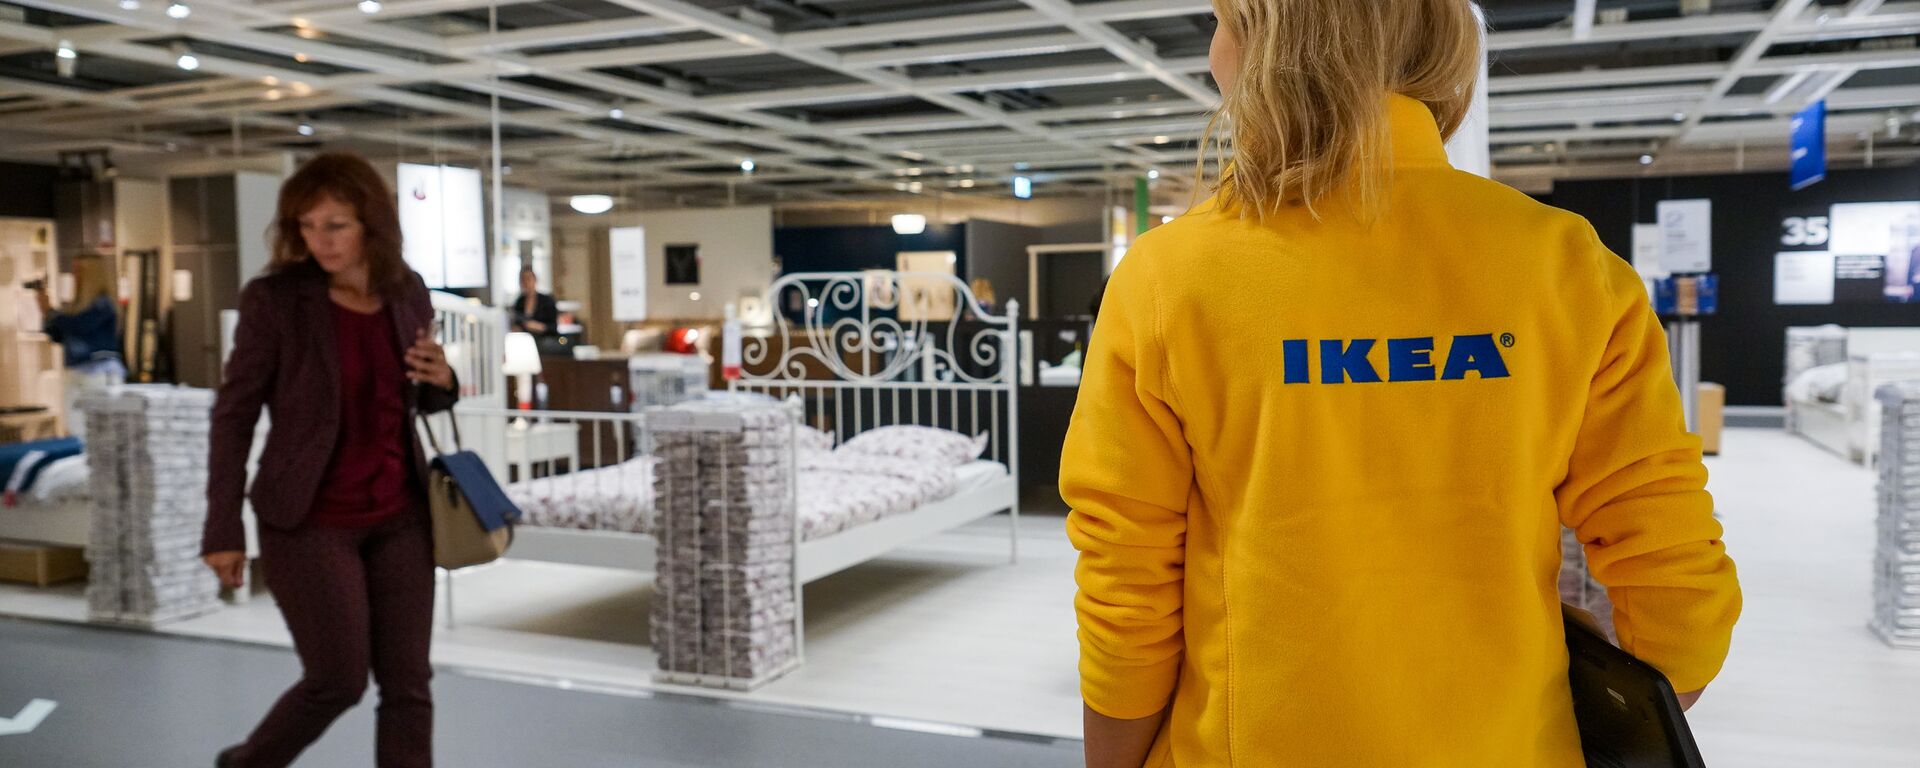 Магазин IKEA в Риге - Sputnik Latvija, 1920, 13.09.2018